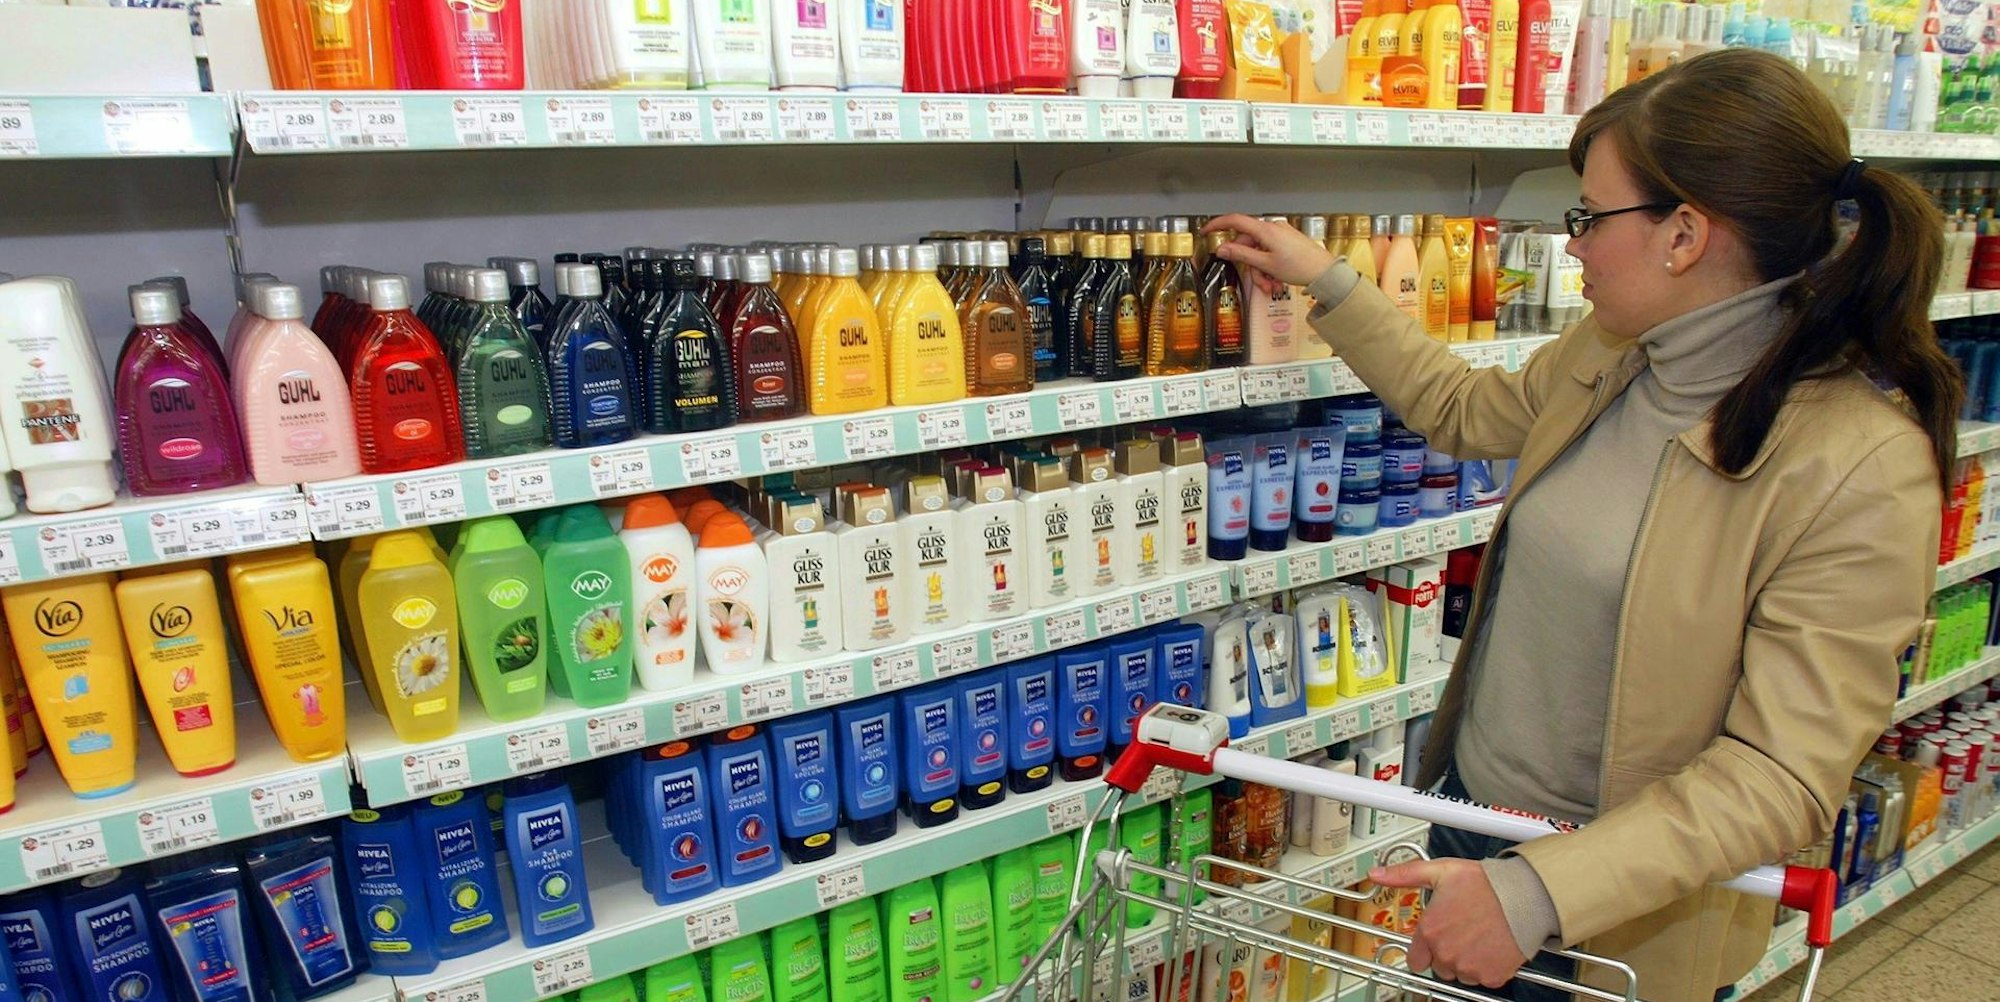 Frau nimmt Shampoo aus dem Supermarktregal